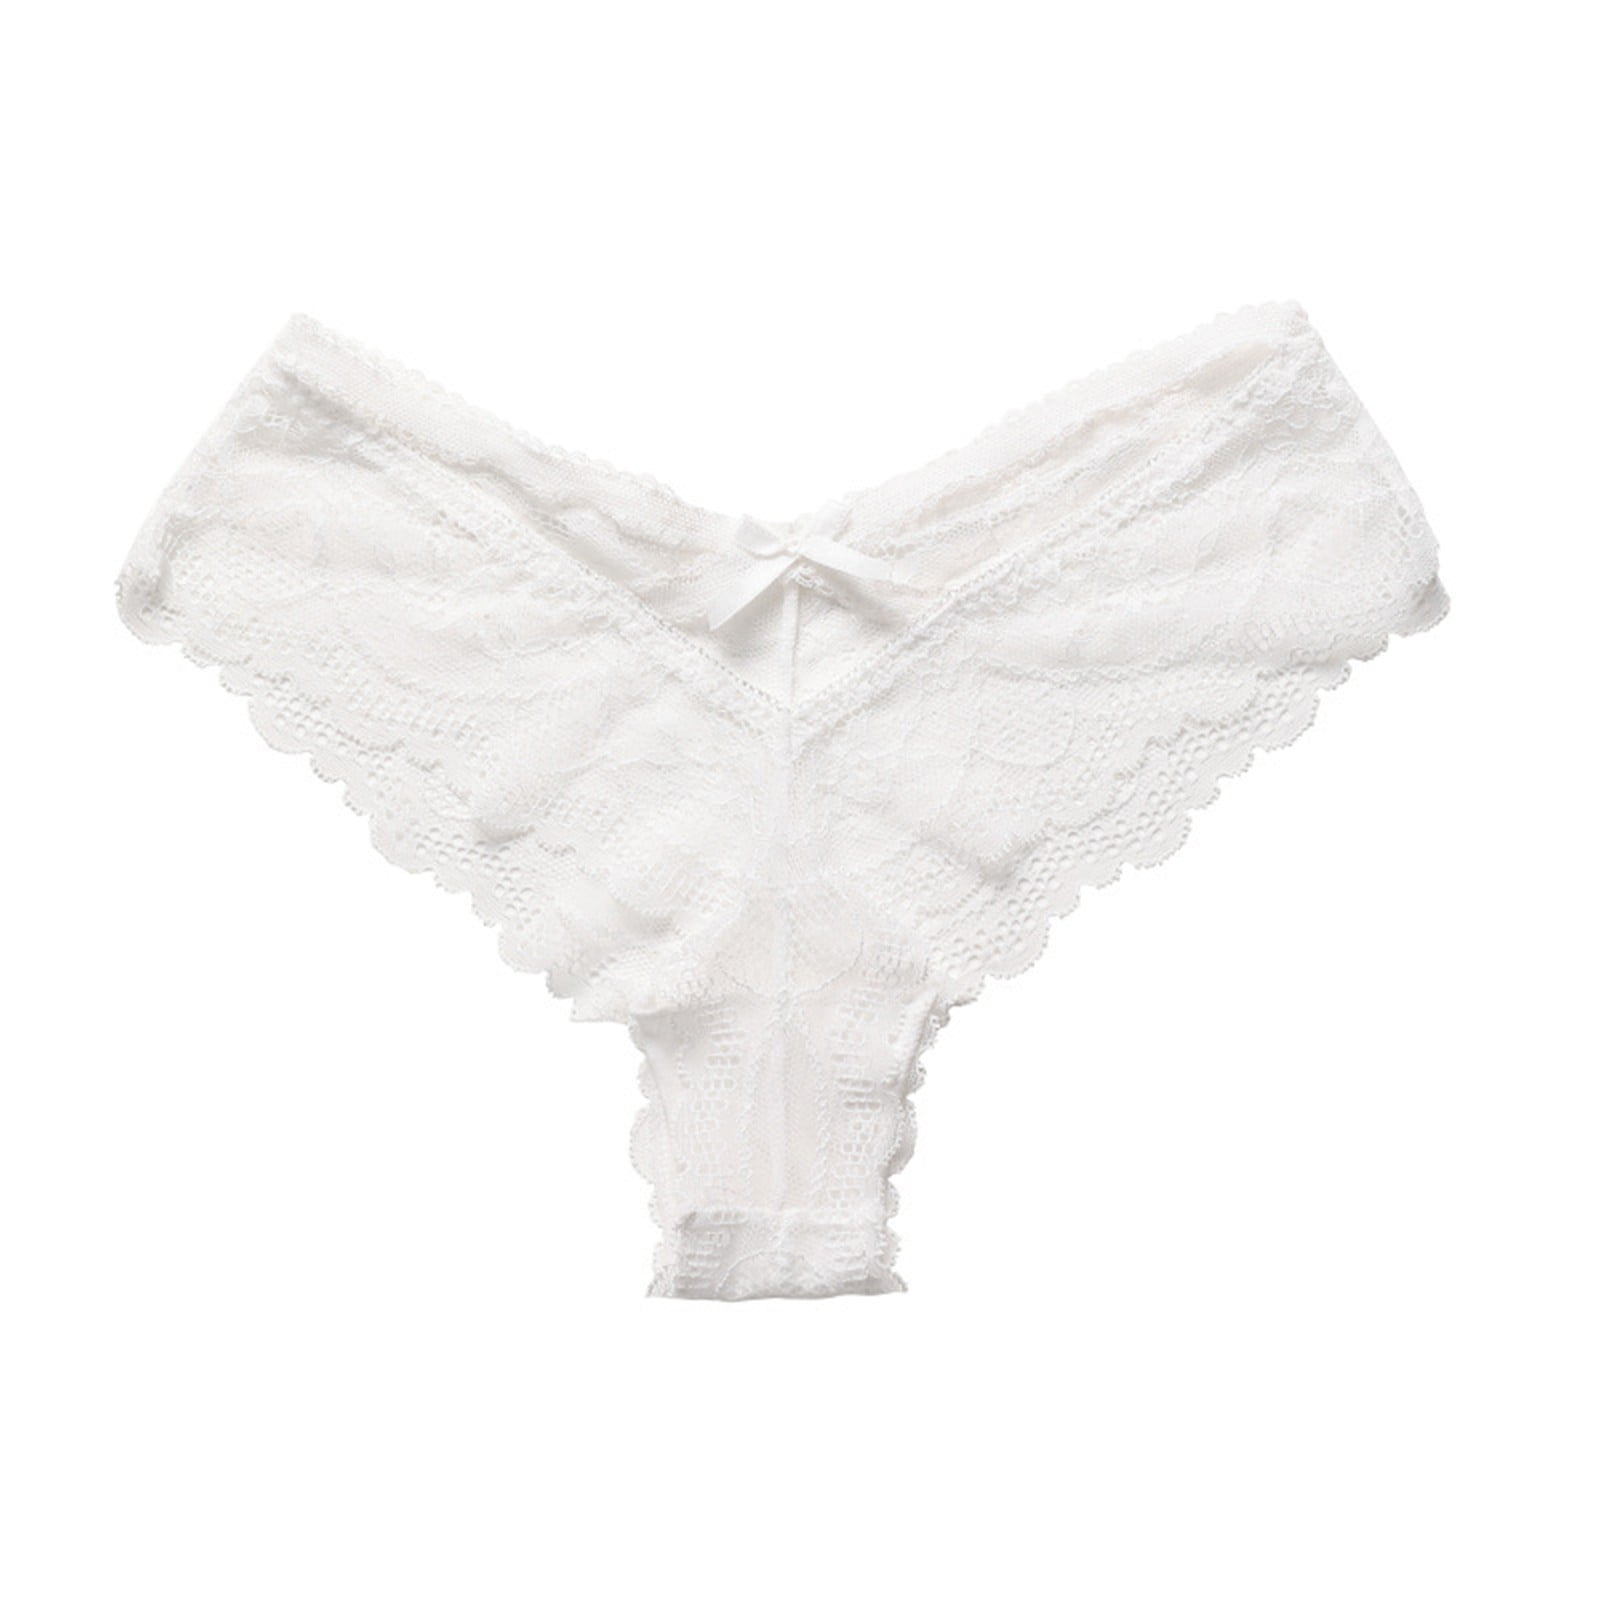 Vodex Girls camisole - Underwear white wholesale 12 pcs - carton